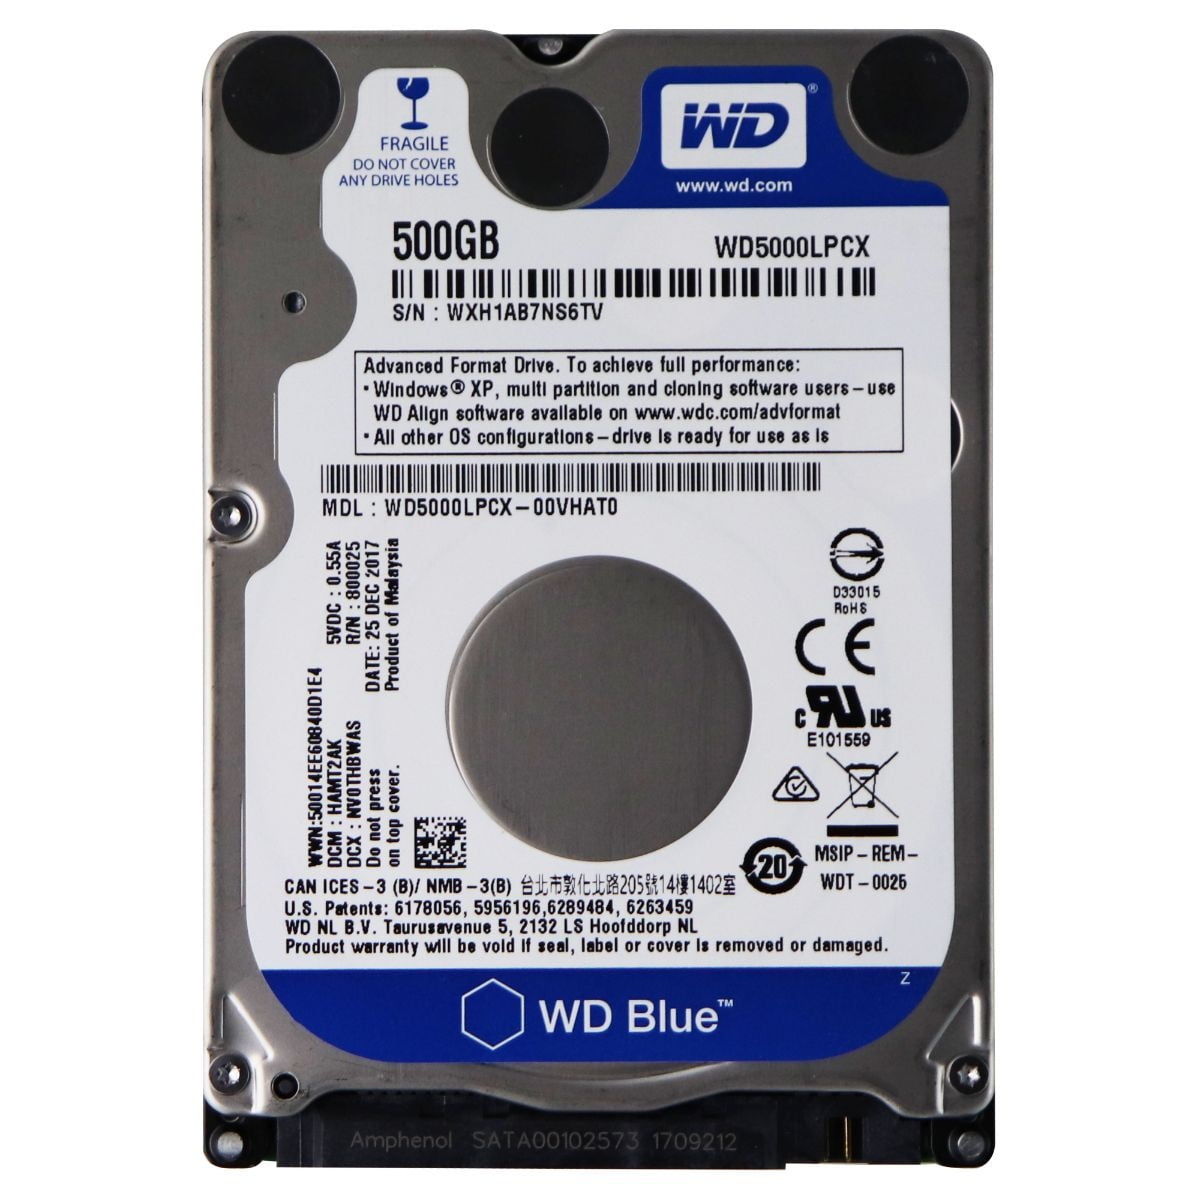 WD Blue 500GB Mobile Hard Disk Drive - 5400 RPM SATA 6 Gb/s 7.0 MM 2.5